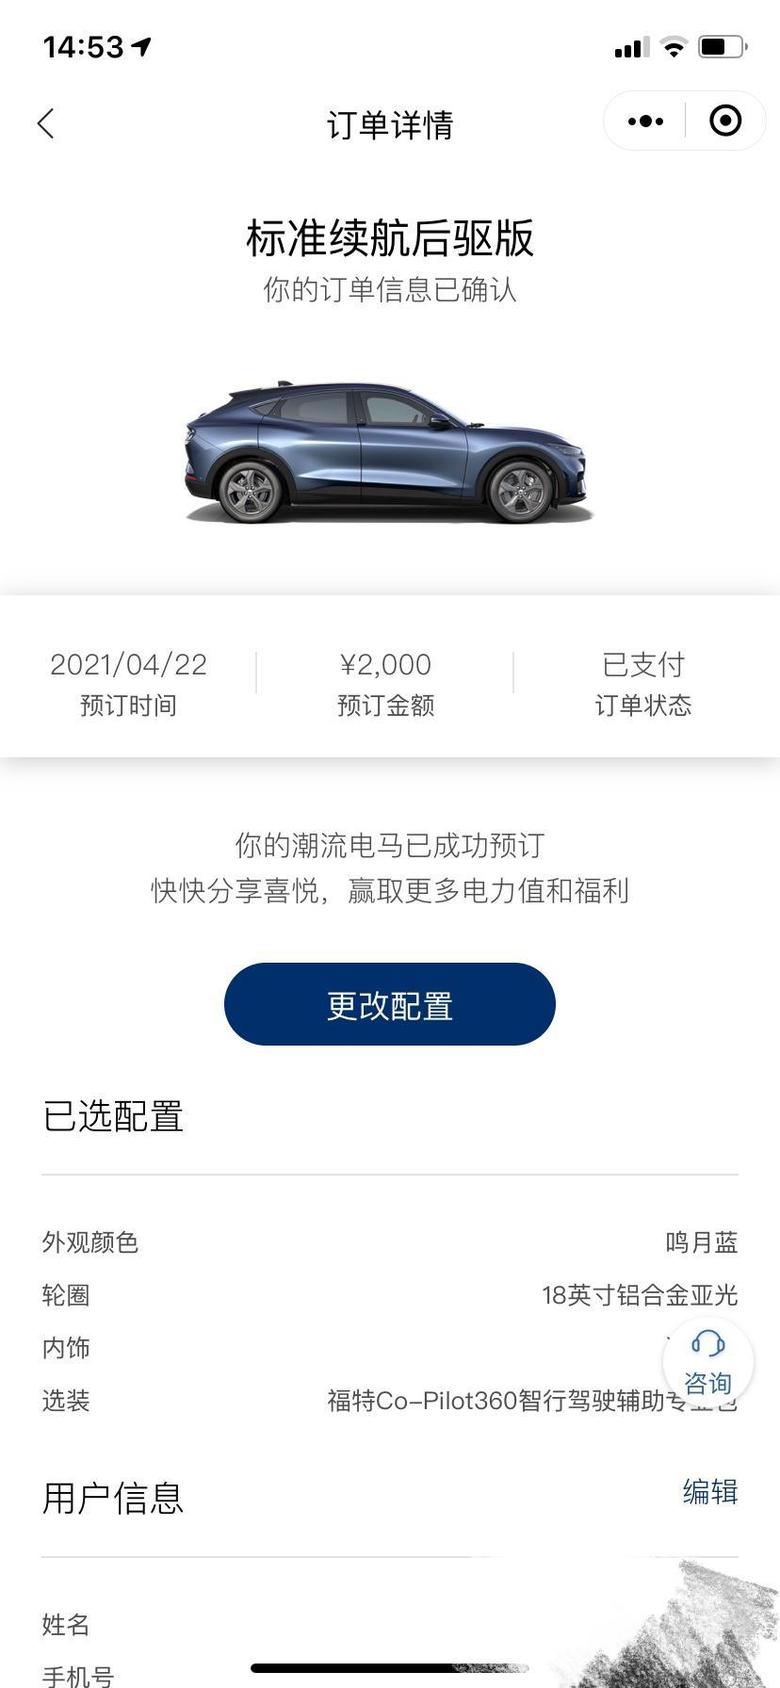 mustang mach e 不想等了。4月上海车展订的mache标续，优先试驾、优先提车、1天5度电累积到现在。